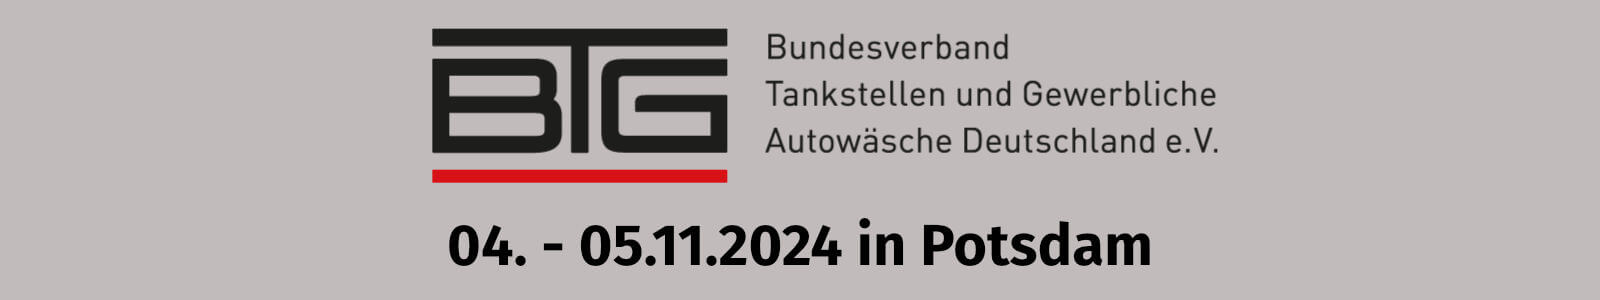 BTG Autowaschkongress 2024 in Potsdam